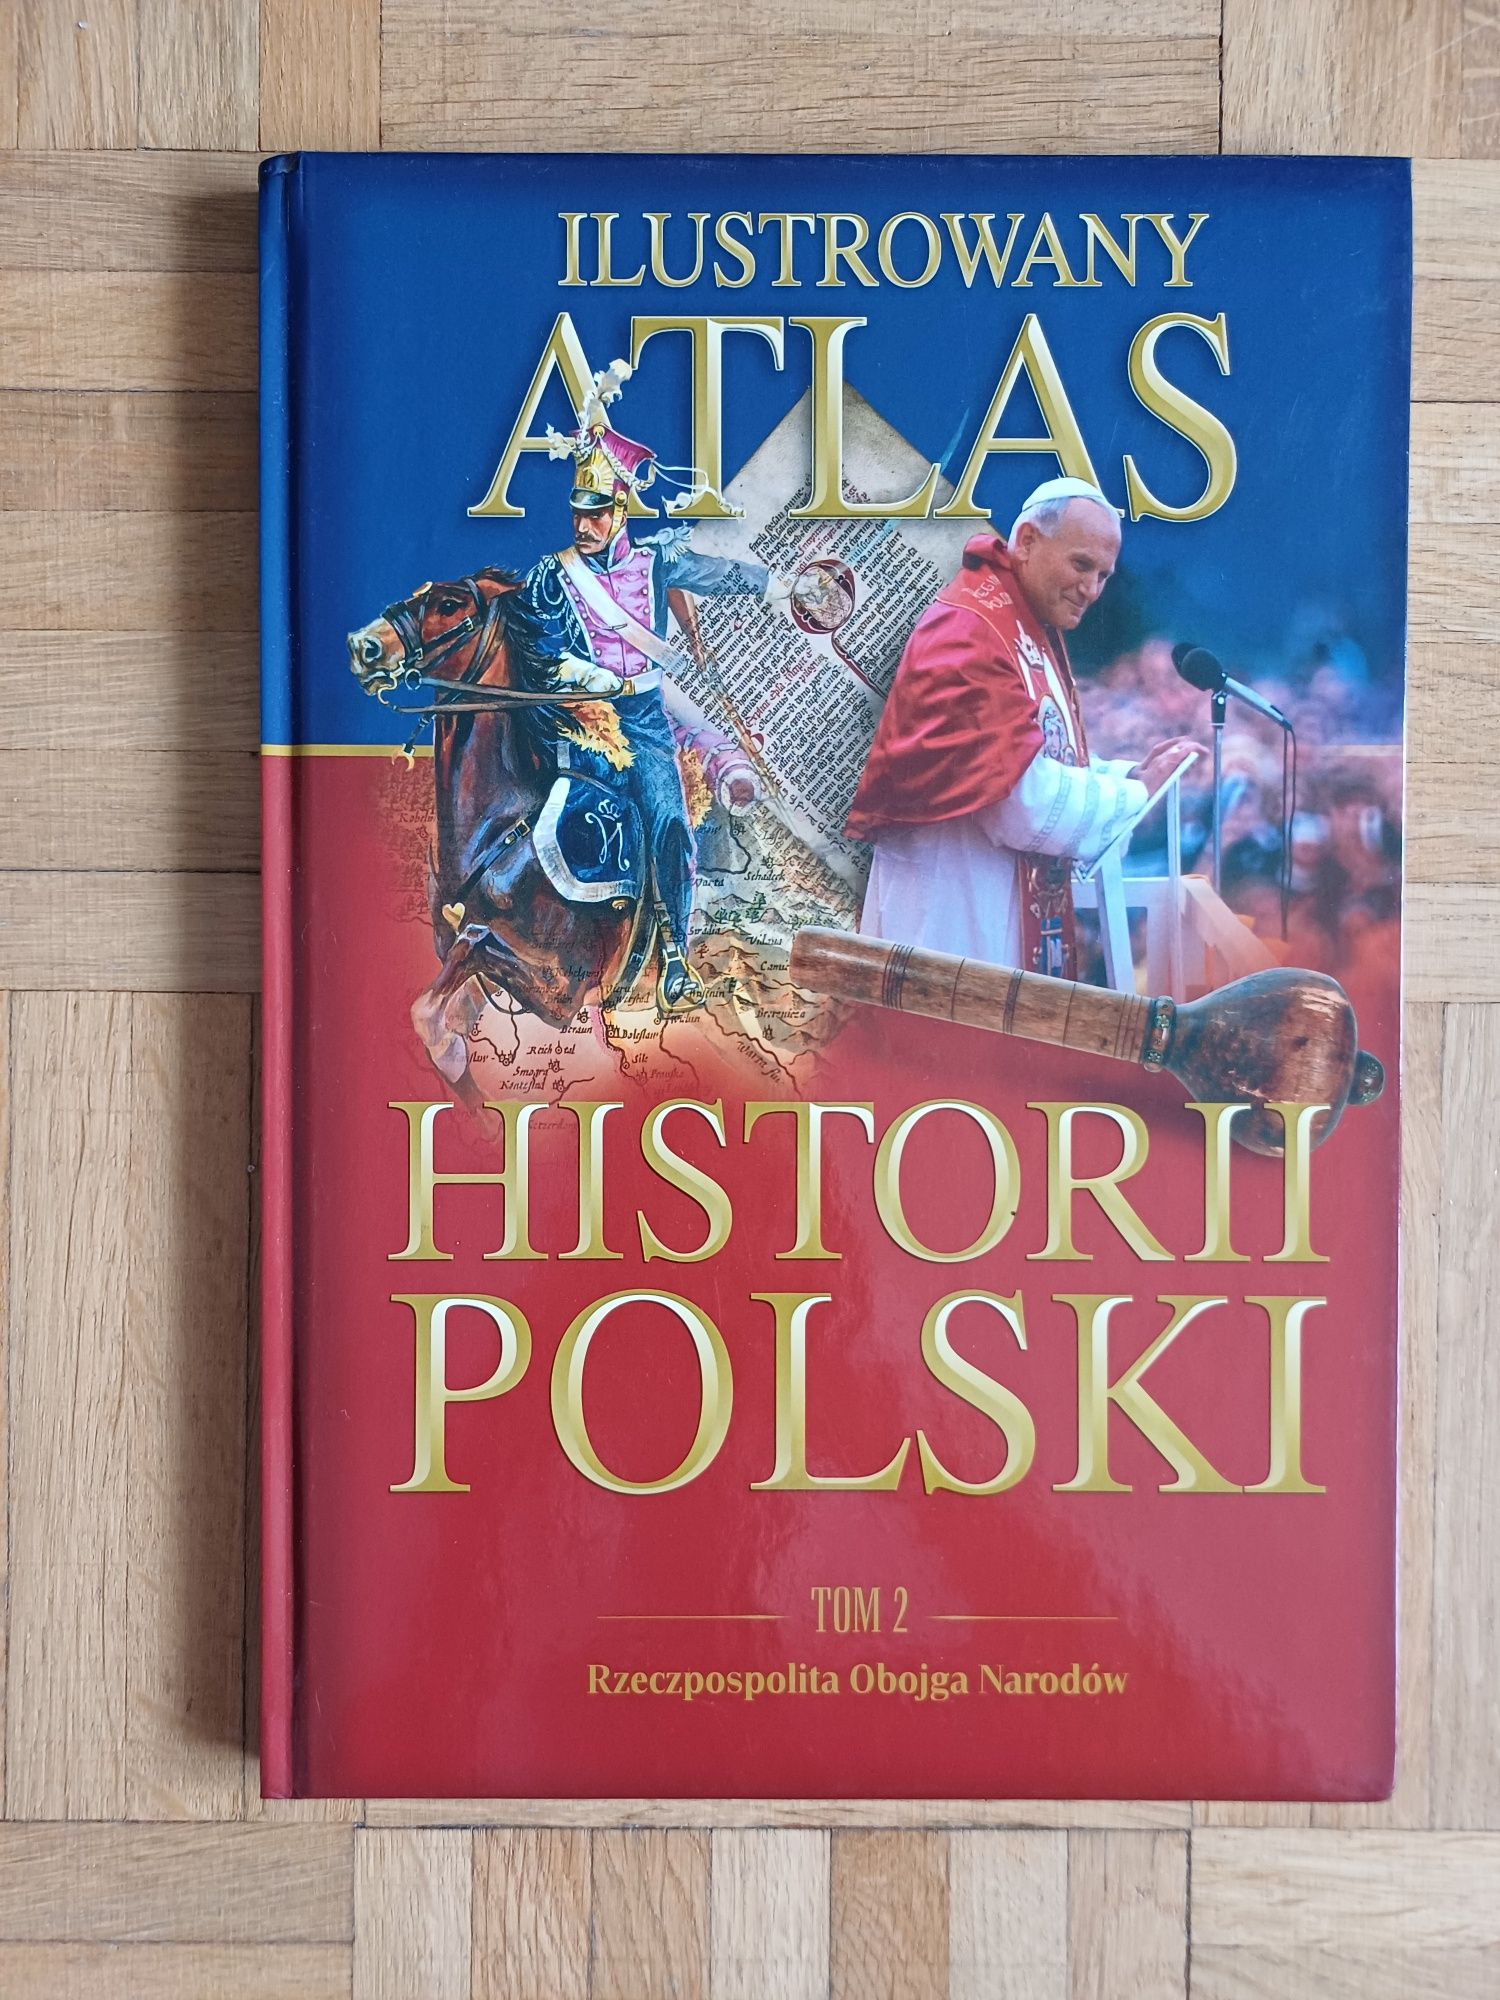 Ilustrowany Atlas Historii Polski, 3 tomy